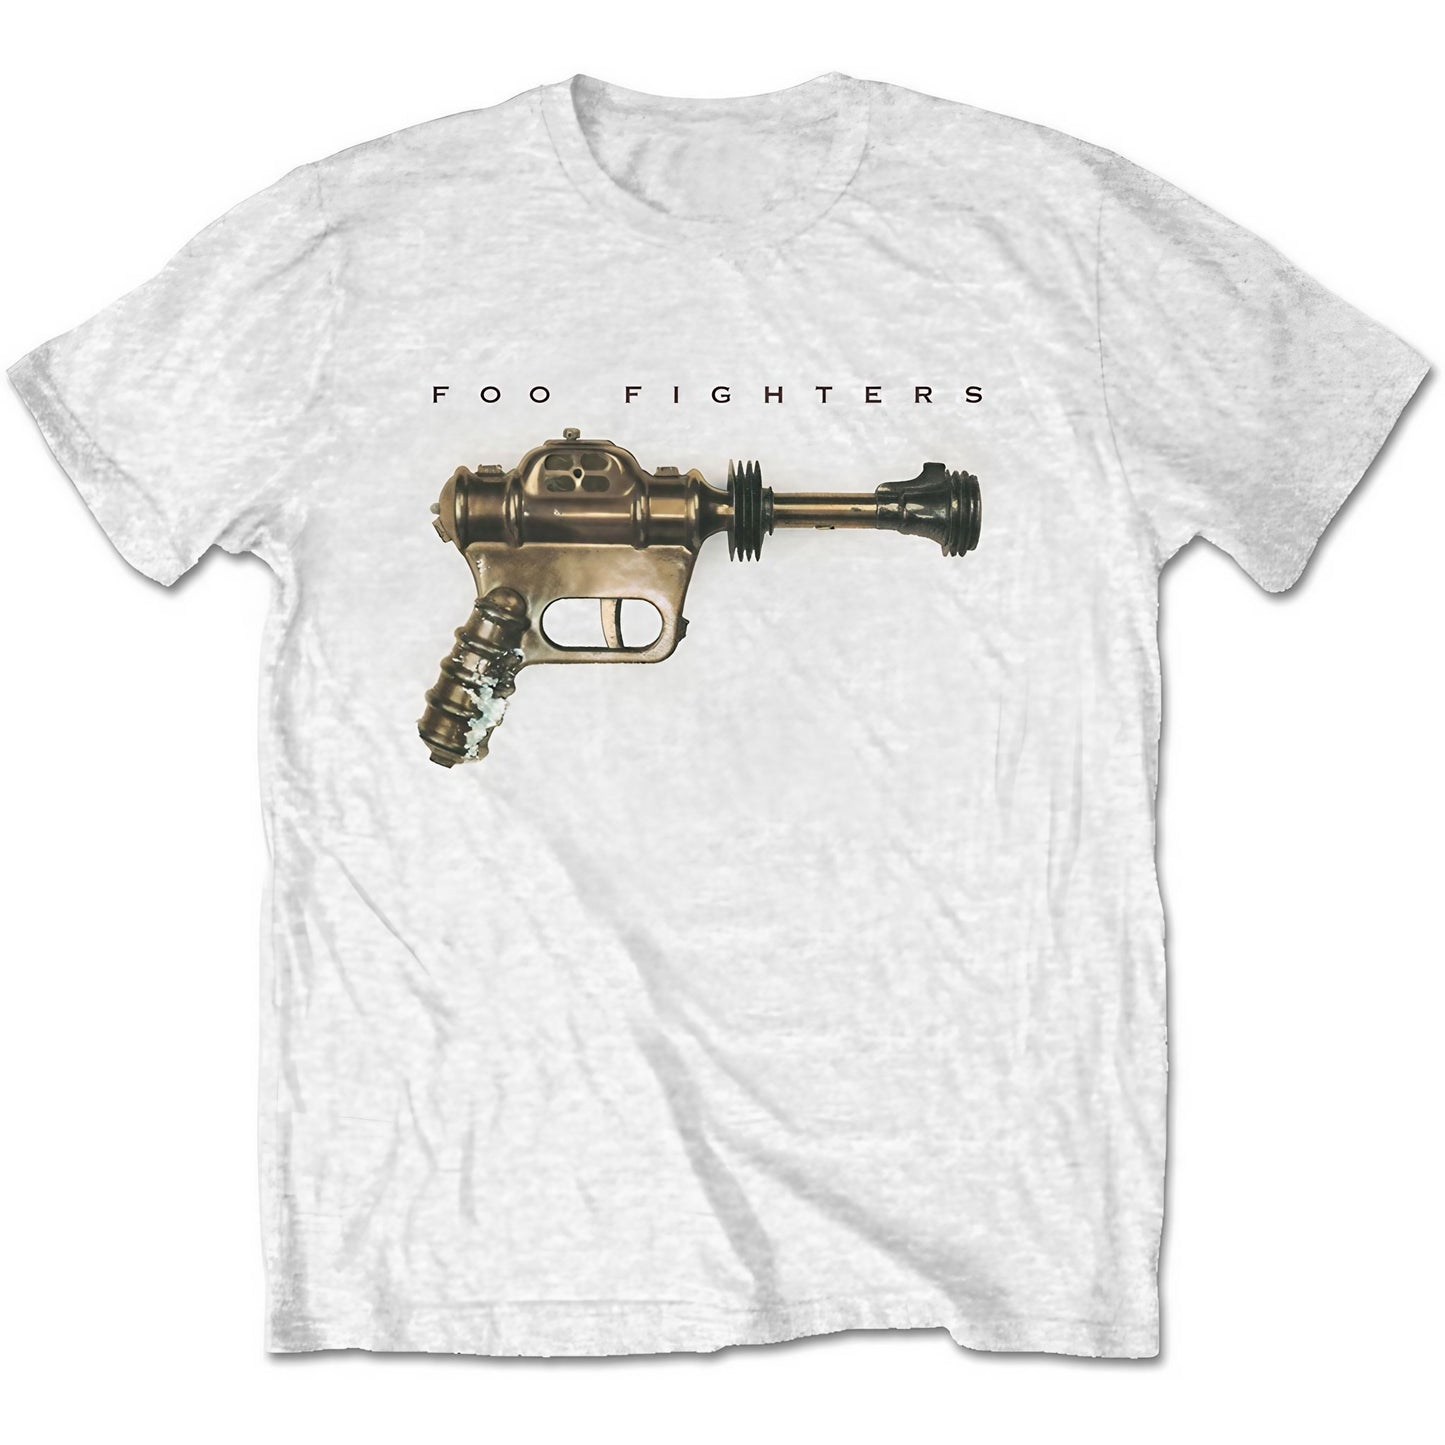 FOO FIGHTERS - Ray Gun T-Shirt